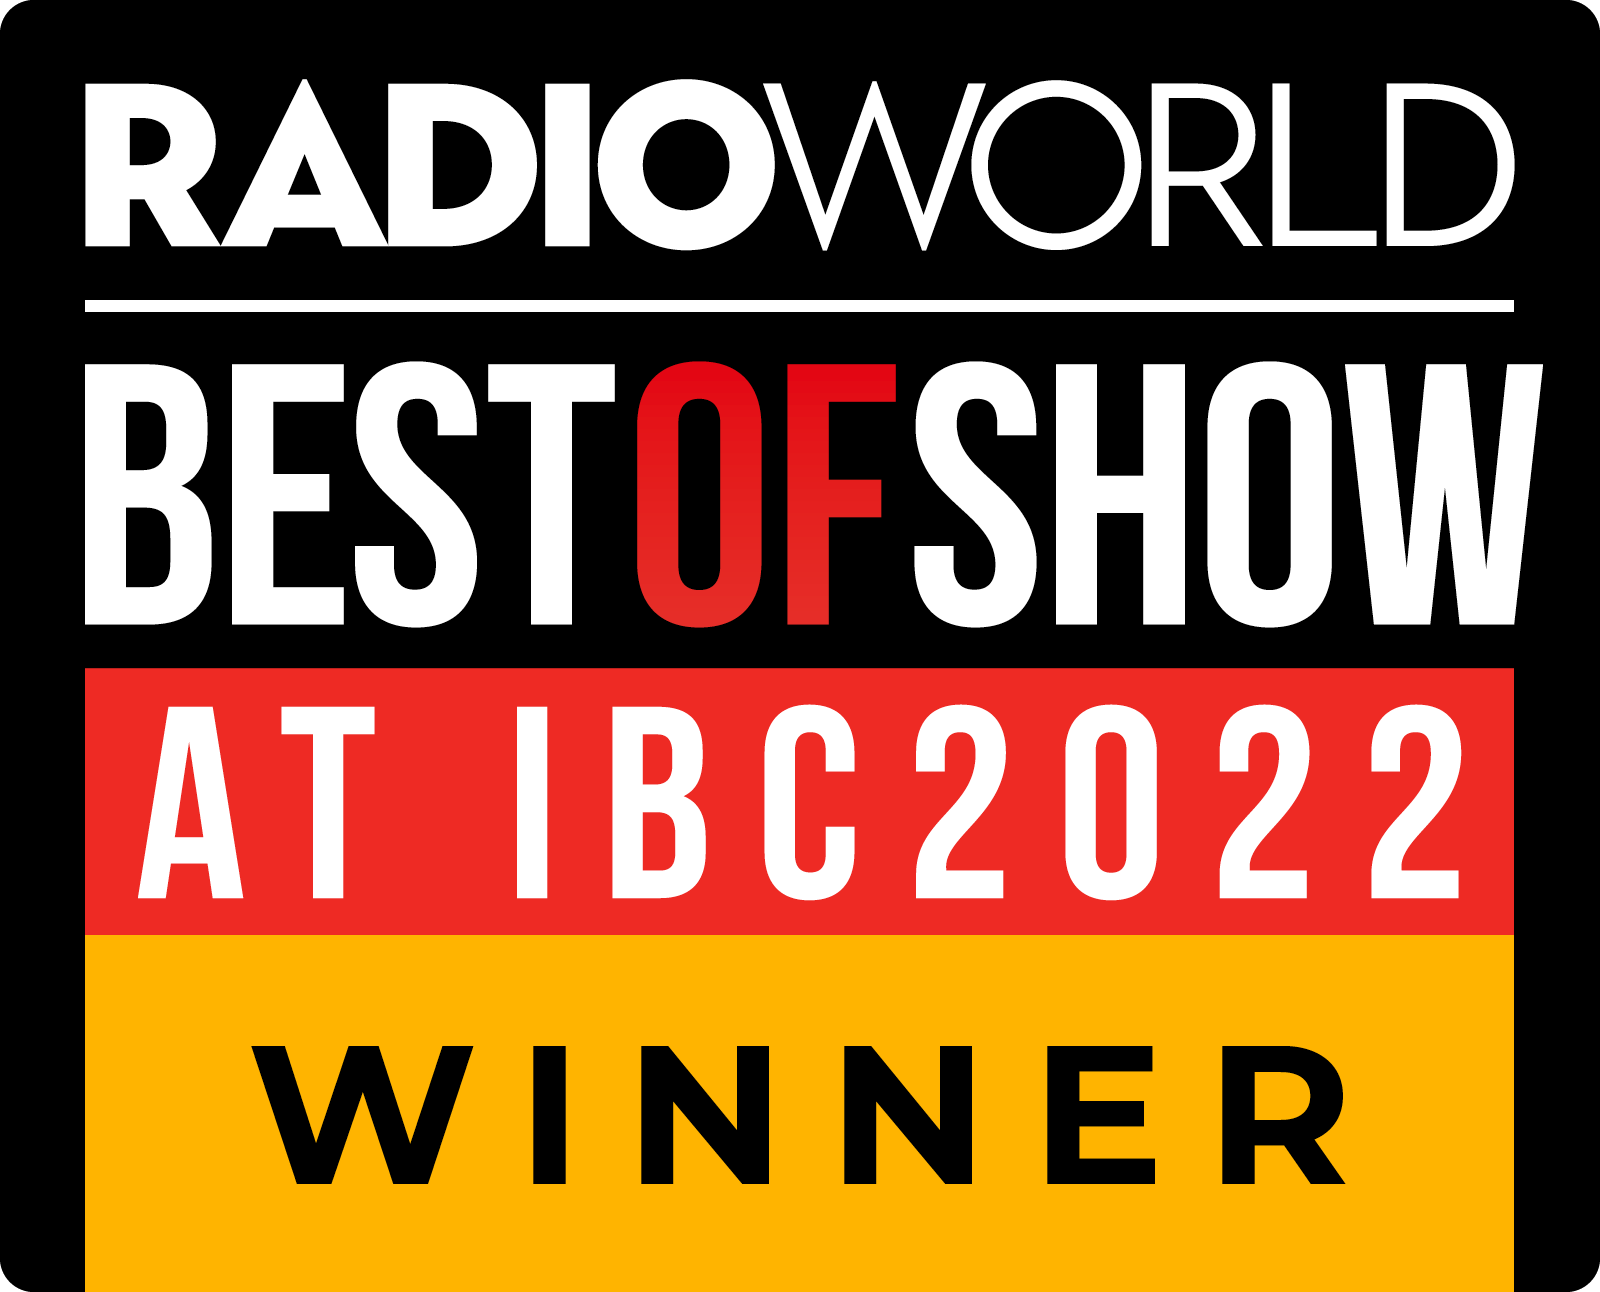 Radioworld best of show award